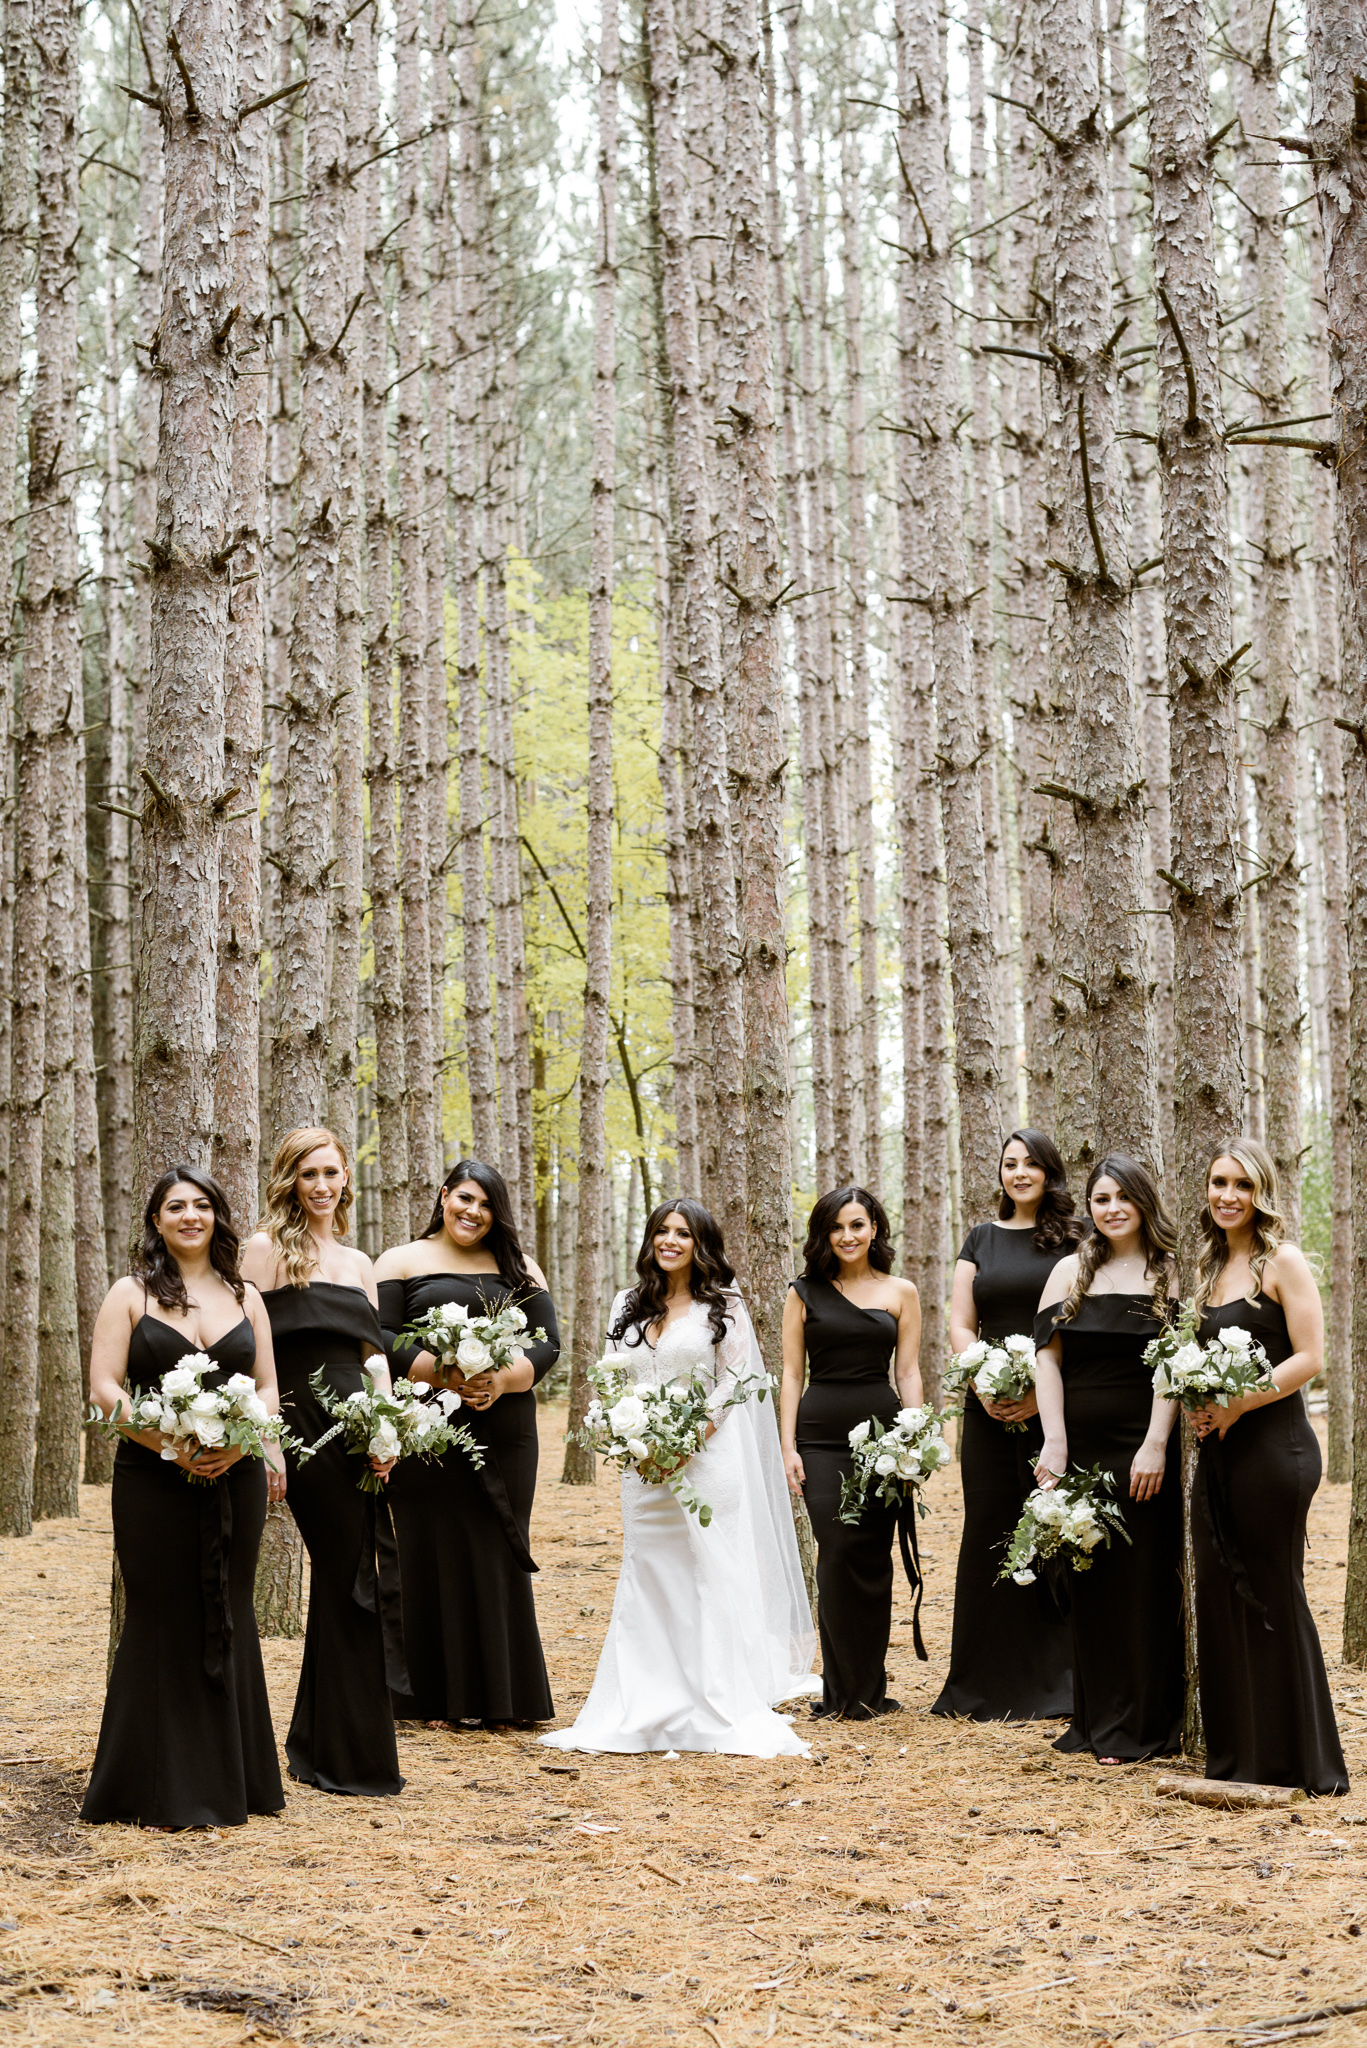 Stunning bridesmaids dressed in floor length all black